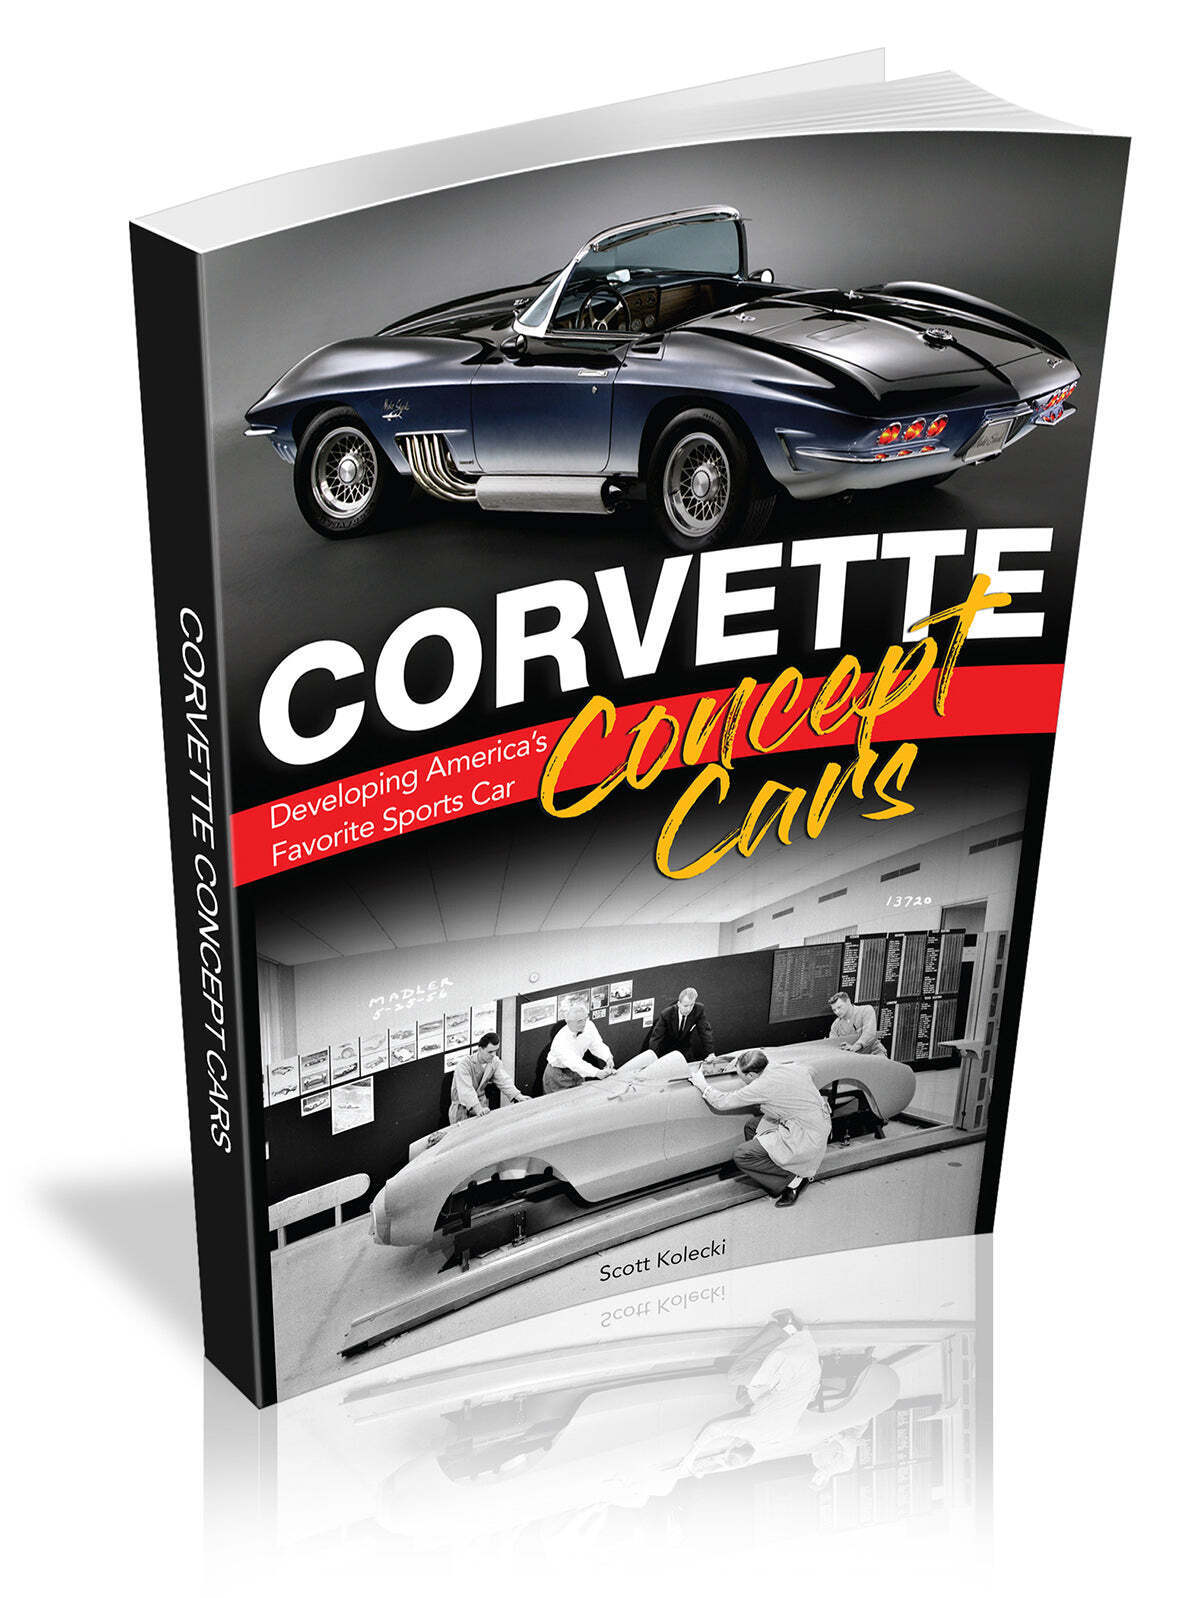 Corvette Concept Cars Developing Americas Favorite Sports Car Earl Duntov book